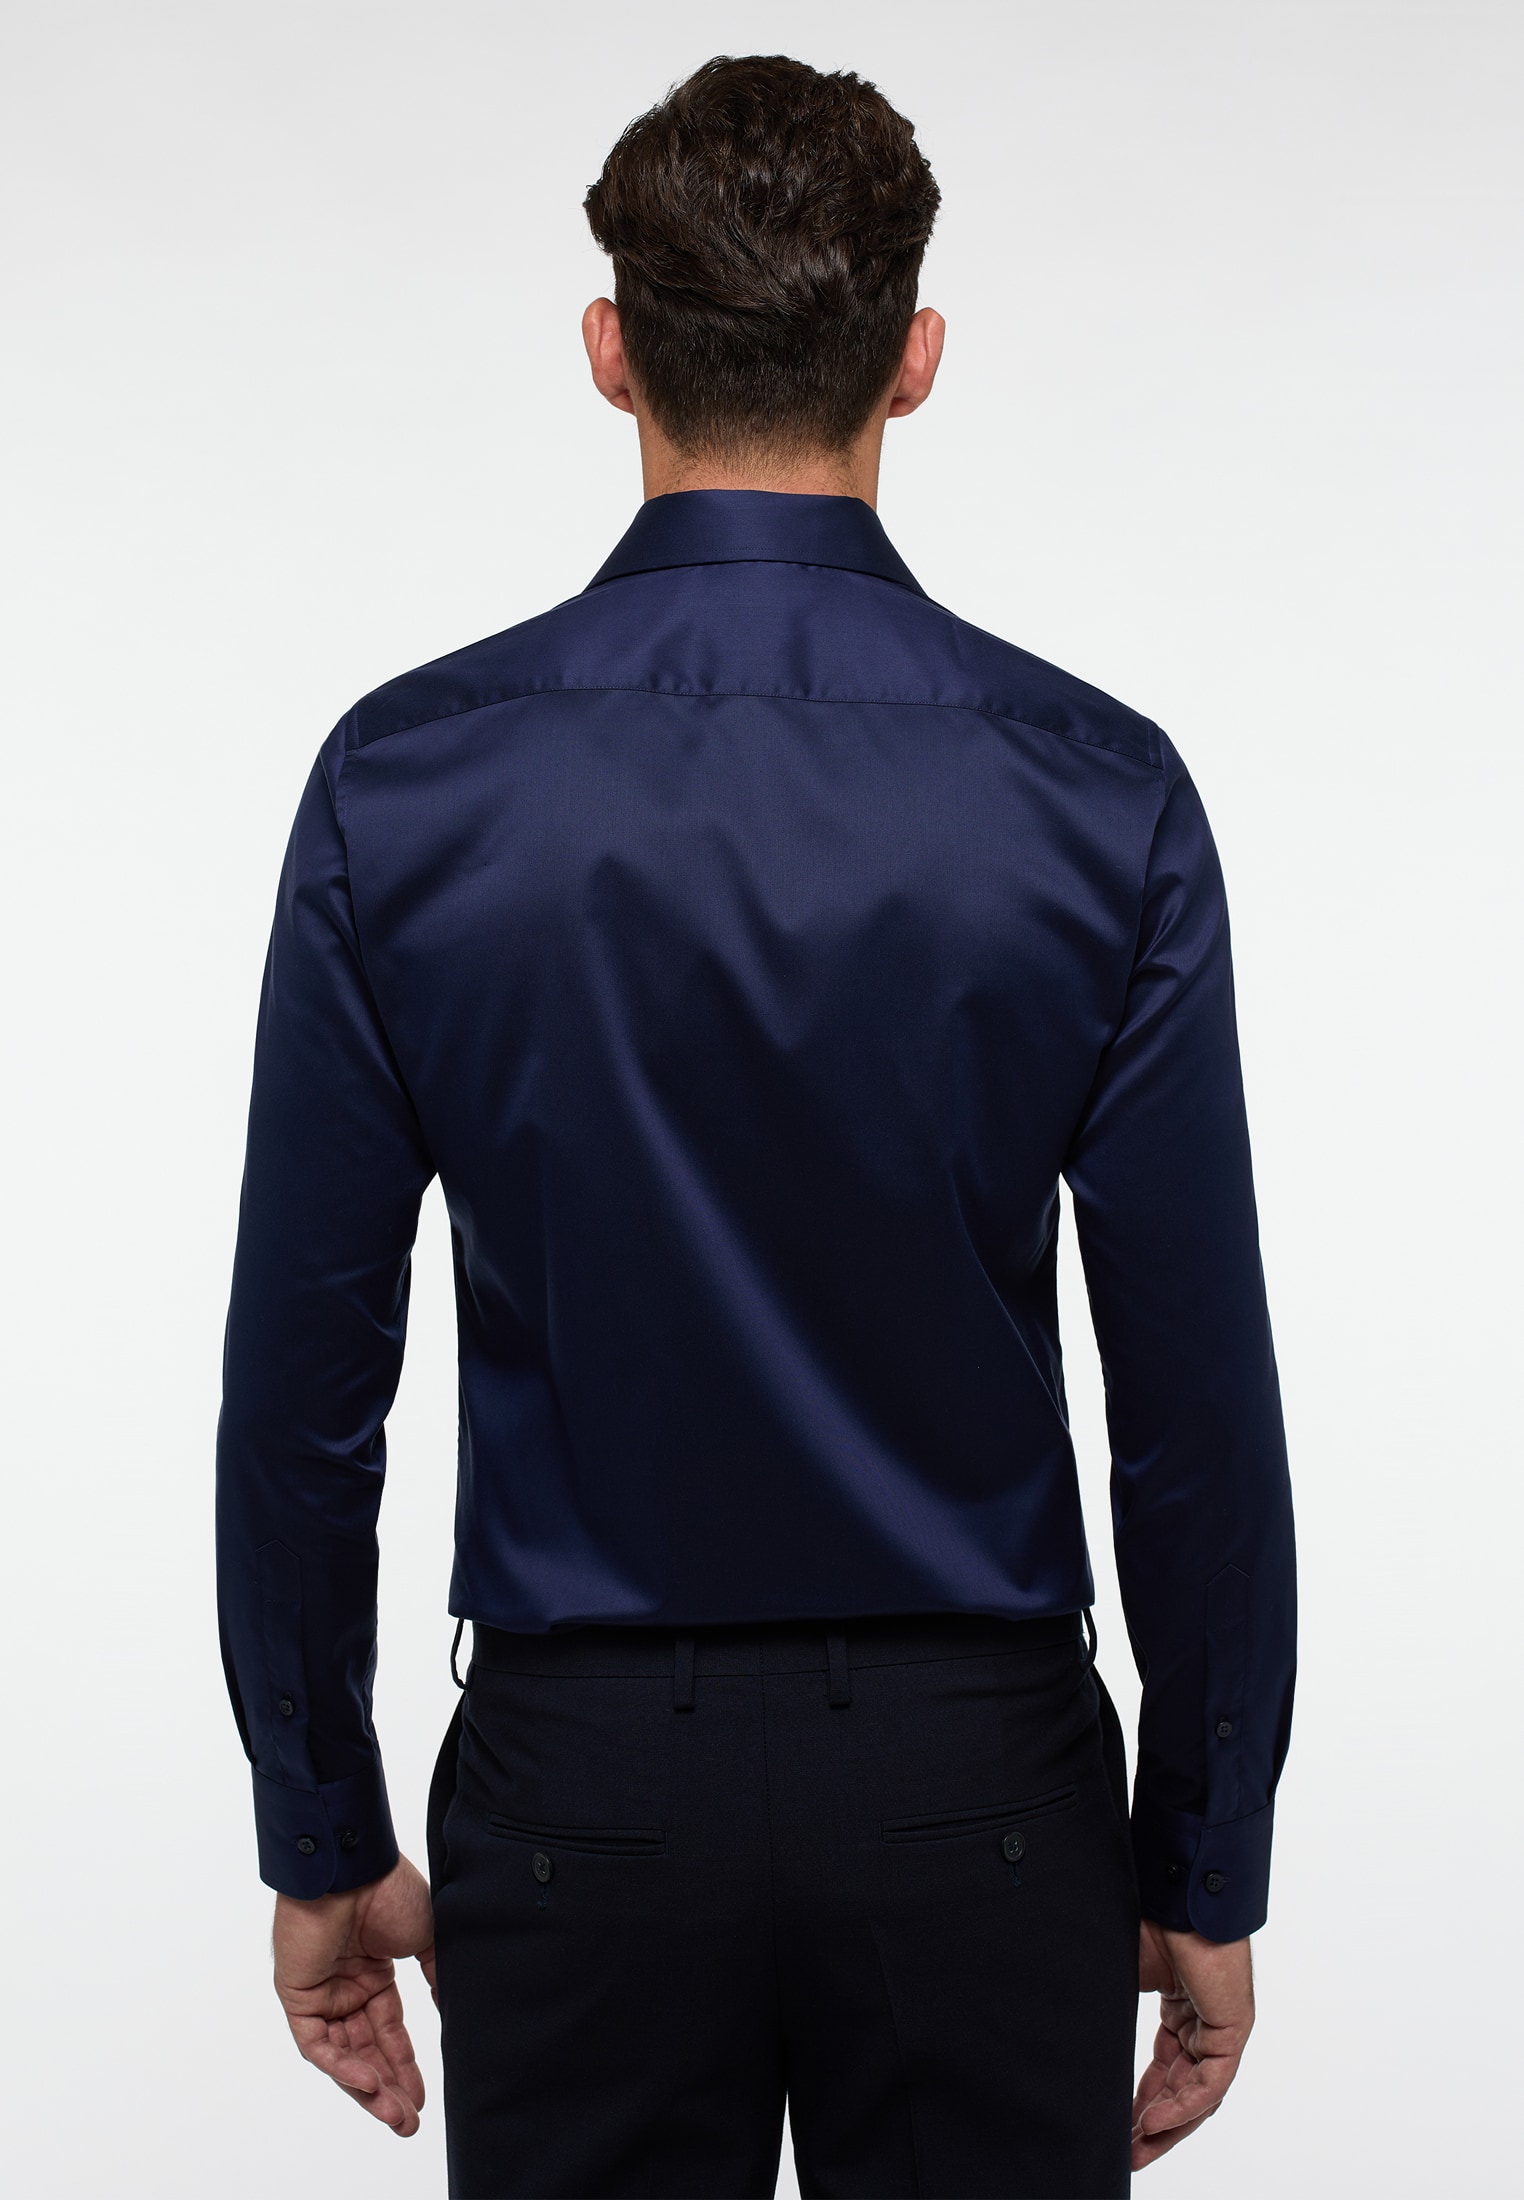 SLIM FIT Luxury Shirt in dunkelblau unifarben | dunkelblau | 44 | Langarm |  1SH04299-01-81-44-1/1